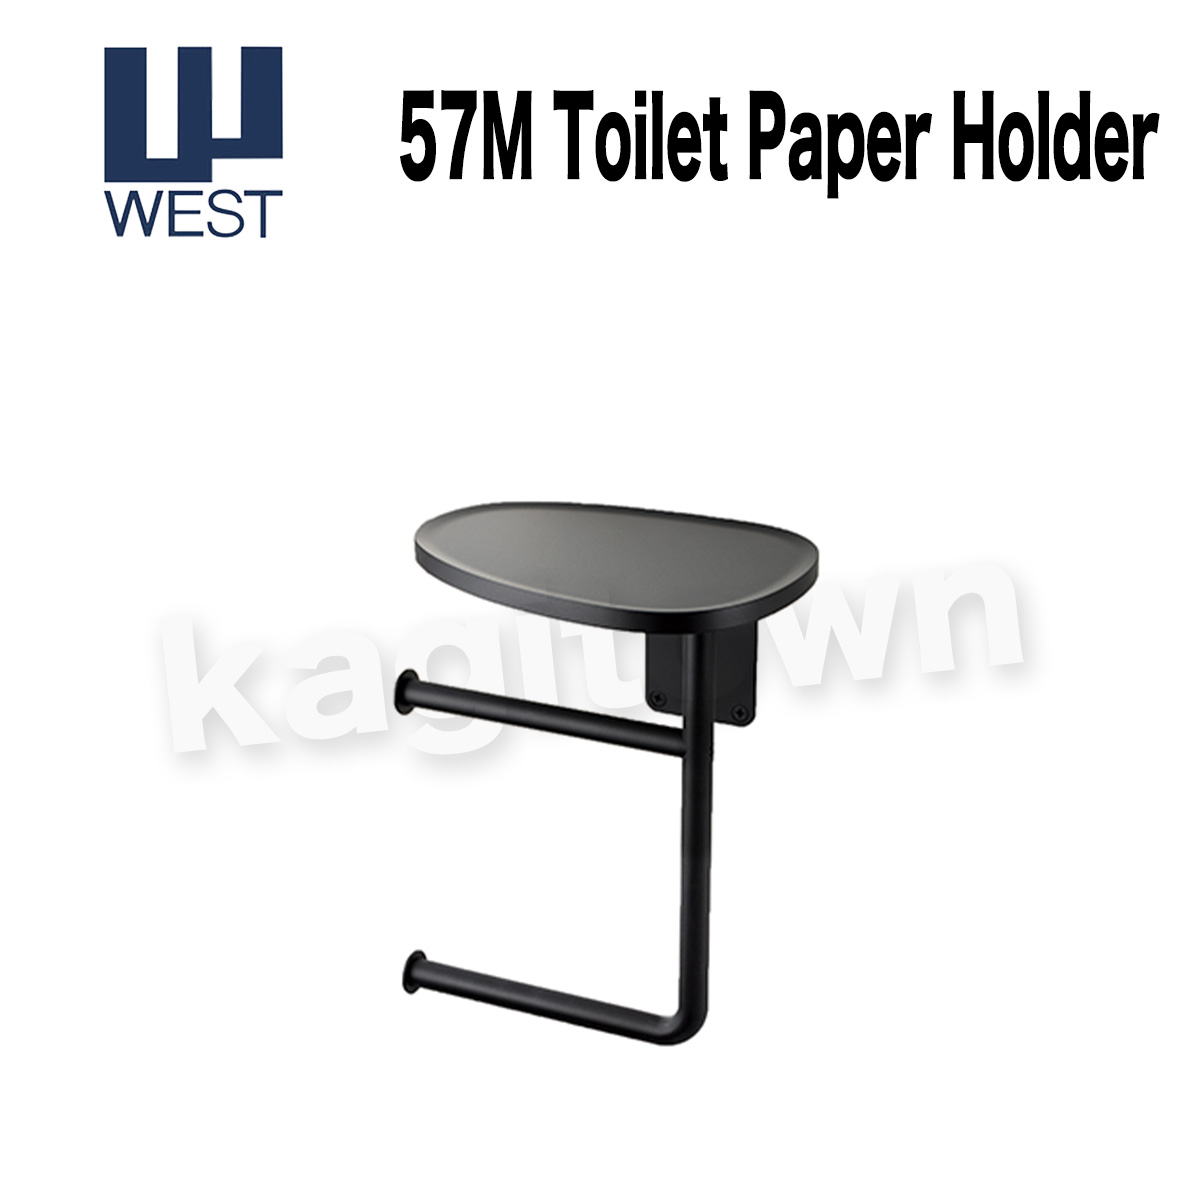 WEST 【ウエスト】トイレットペーパーホルダー[WEST-sasso 57M Toilet Paper Holder]57M Toilet  Paper Holder・シリンダーの格安ネット通販【鍵TOWN】